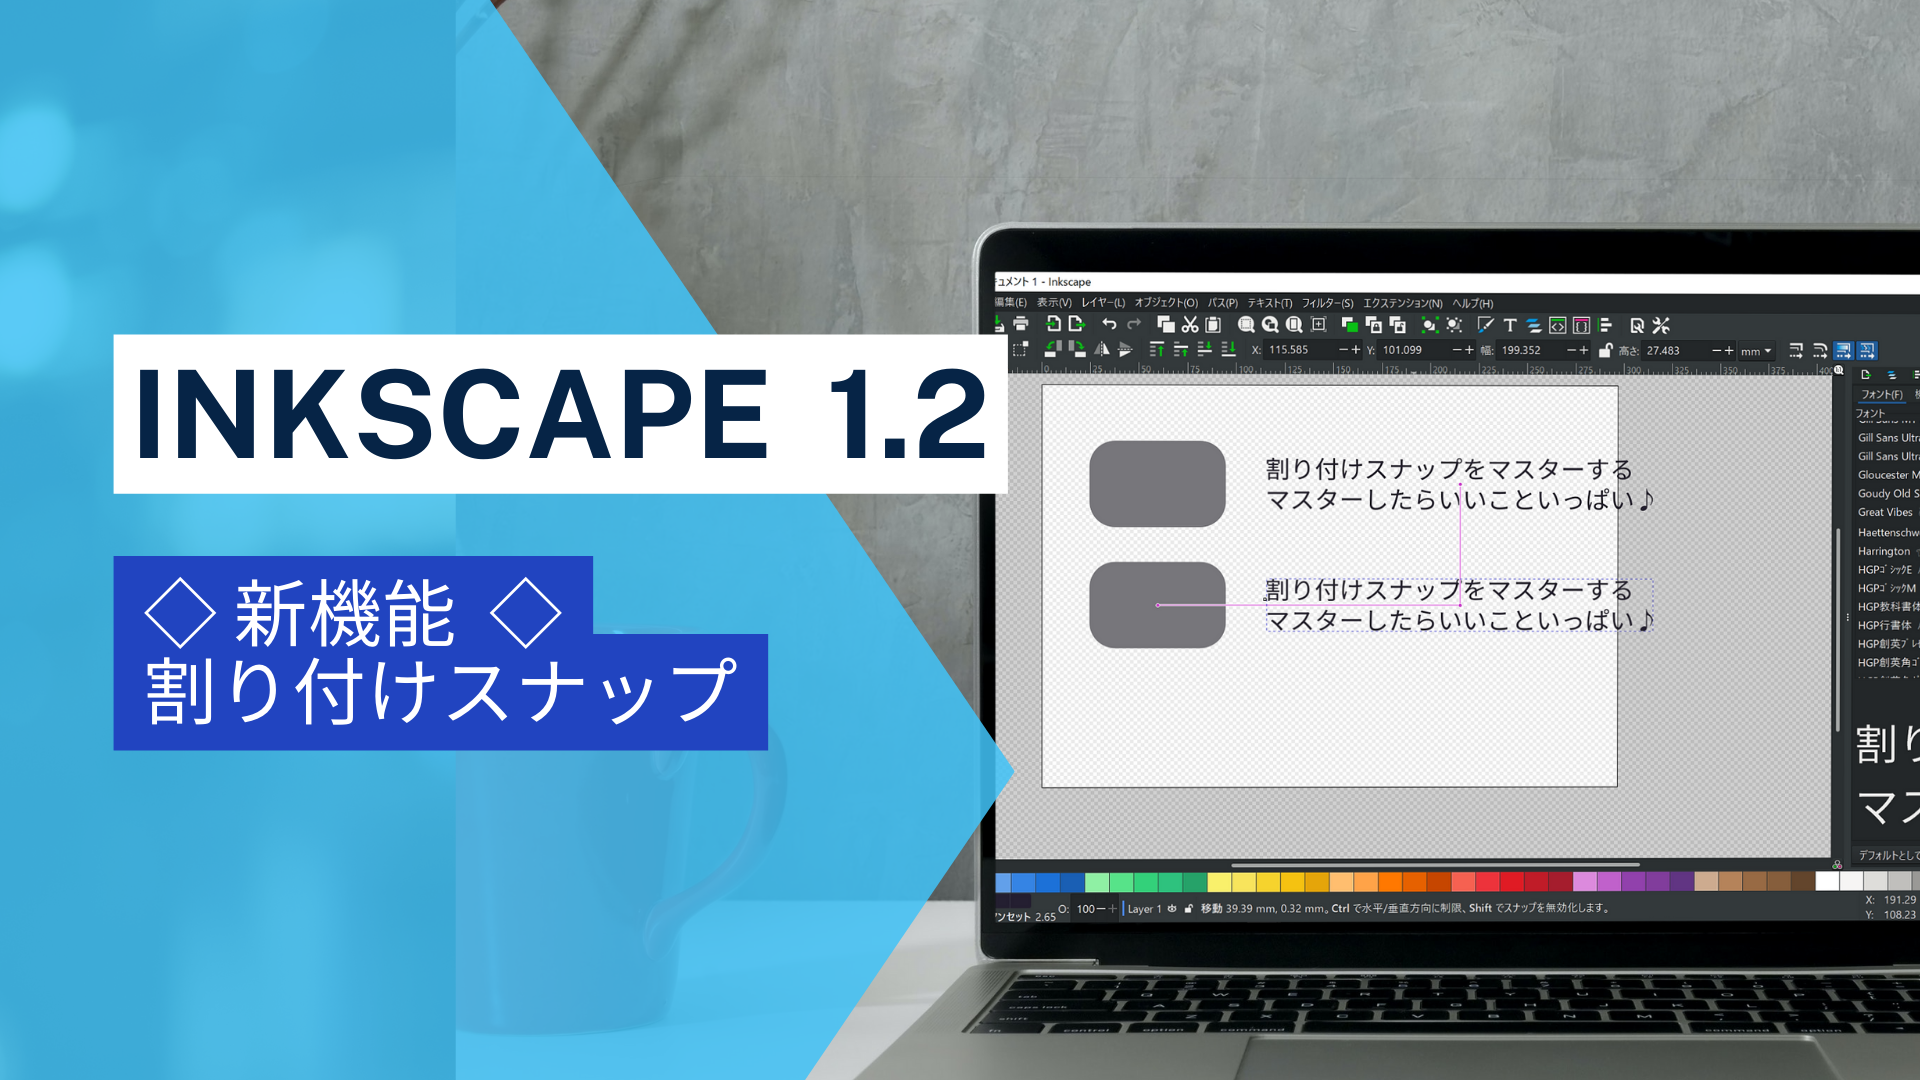 Inkscape1.2 強化されたスナップ機能で快適なレイアウト